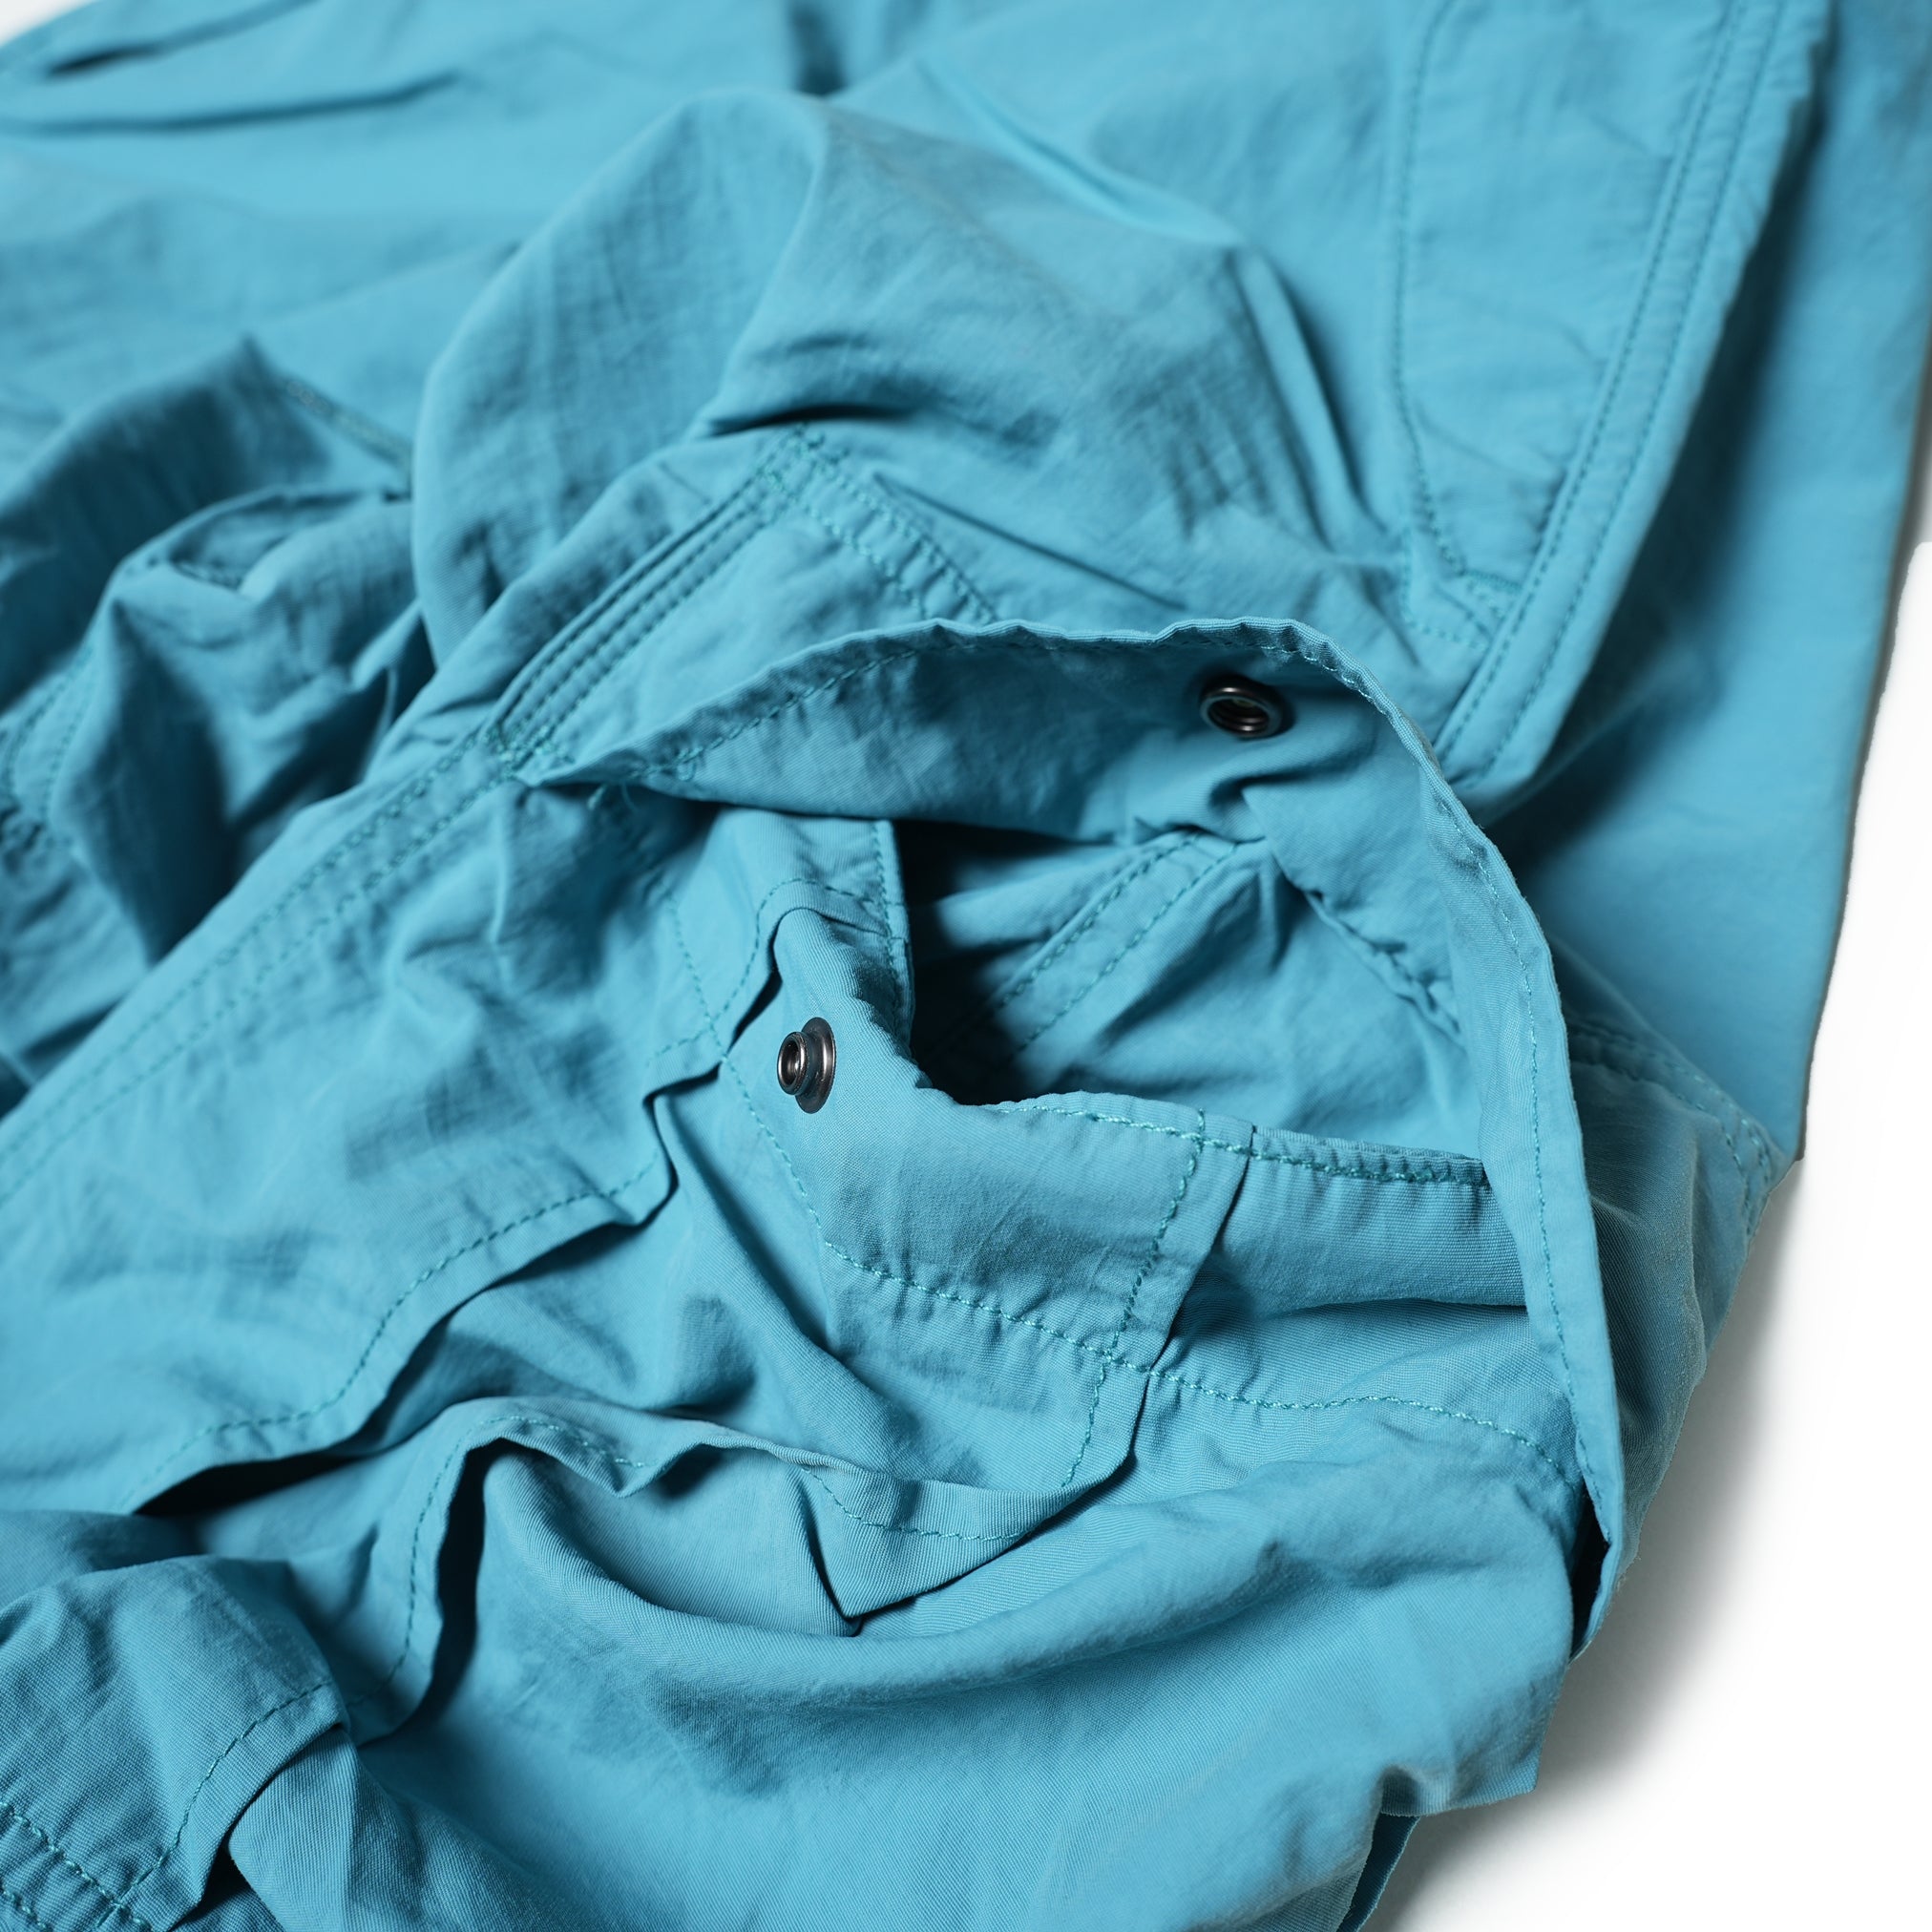 No:AM-2415002 | Name:Nylon OX Cargo Pants | Color:Khaki/Blue【ARMYTWILL_アーミーツイル】